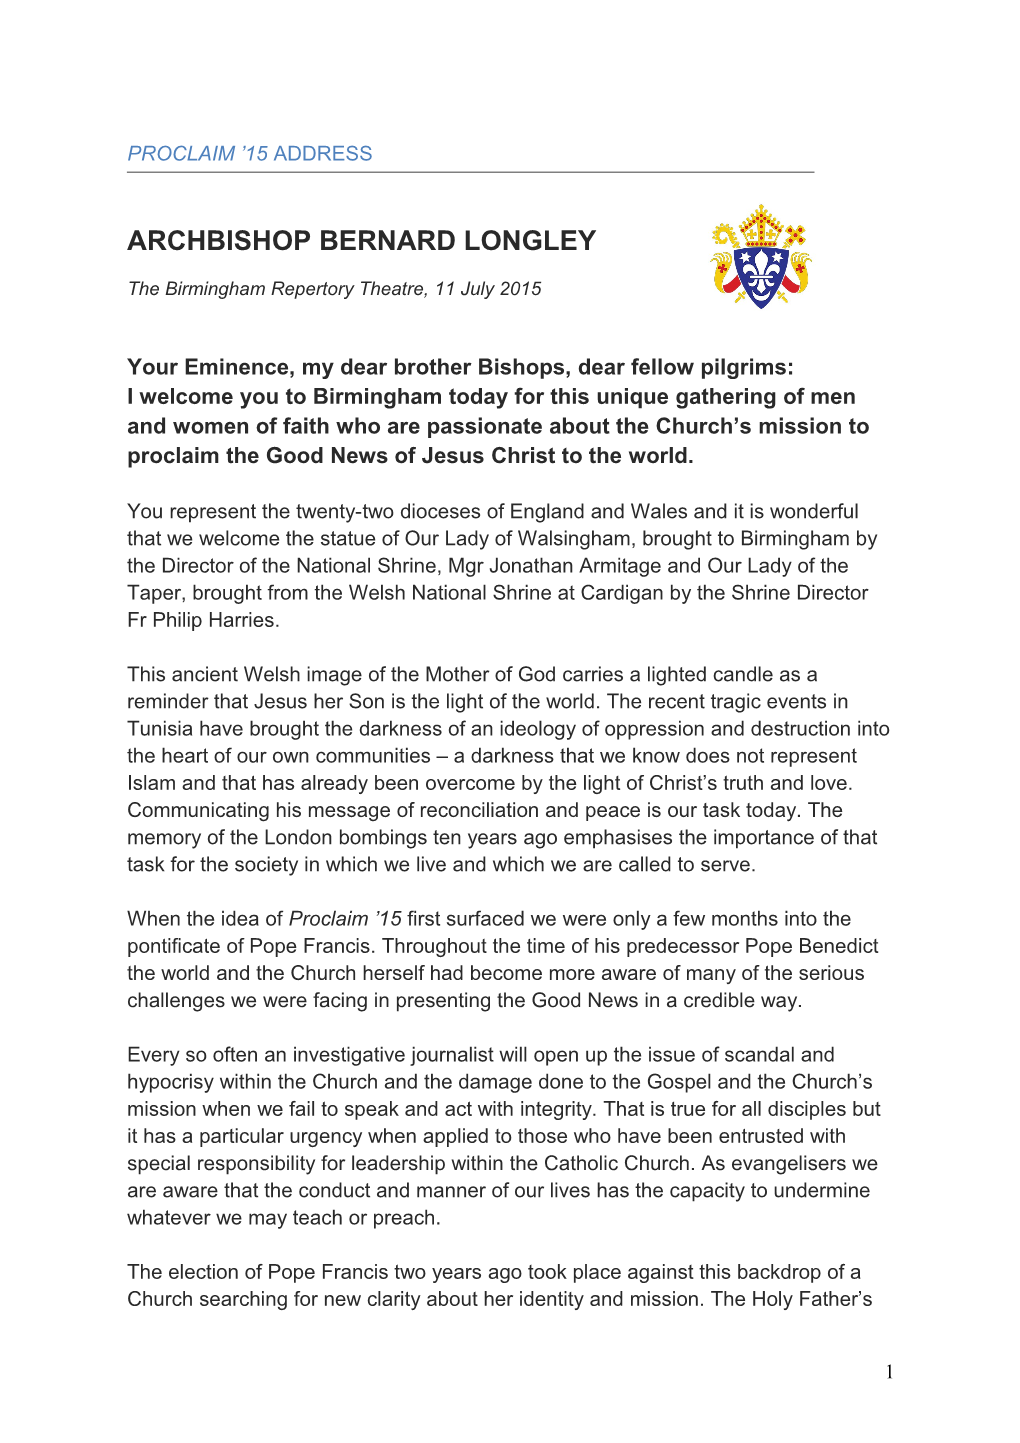 Archbishop Bernard Longley